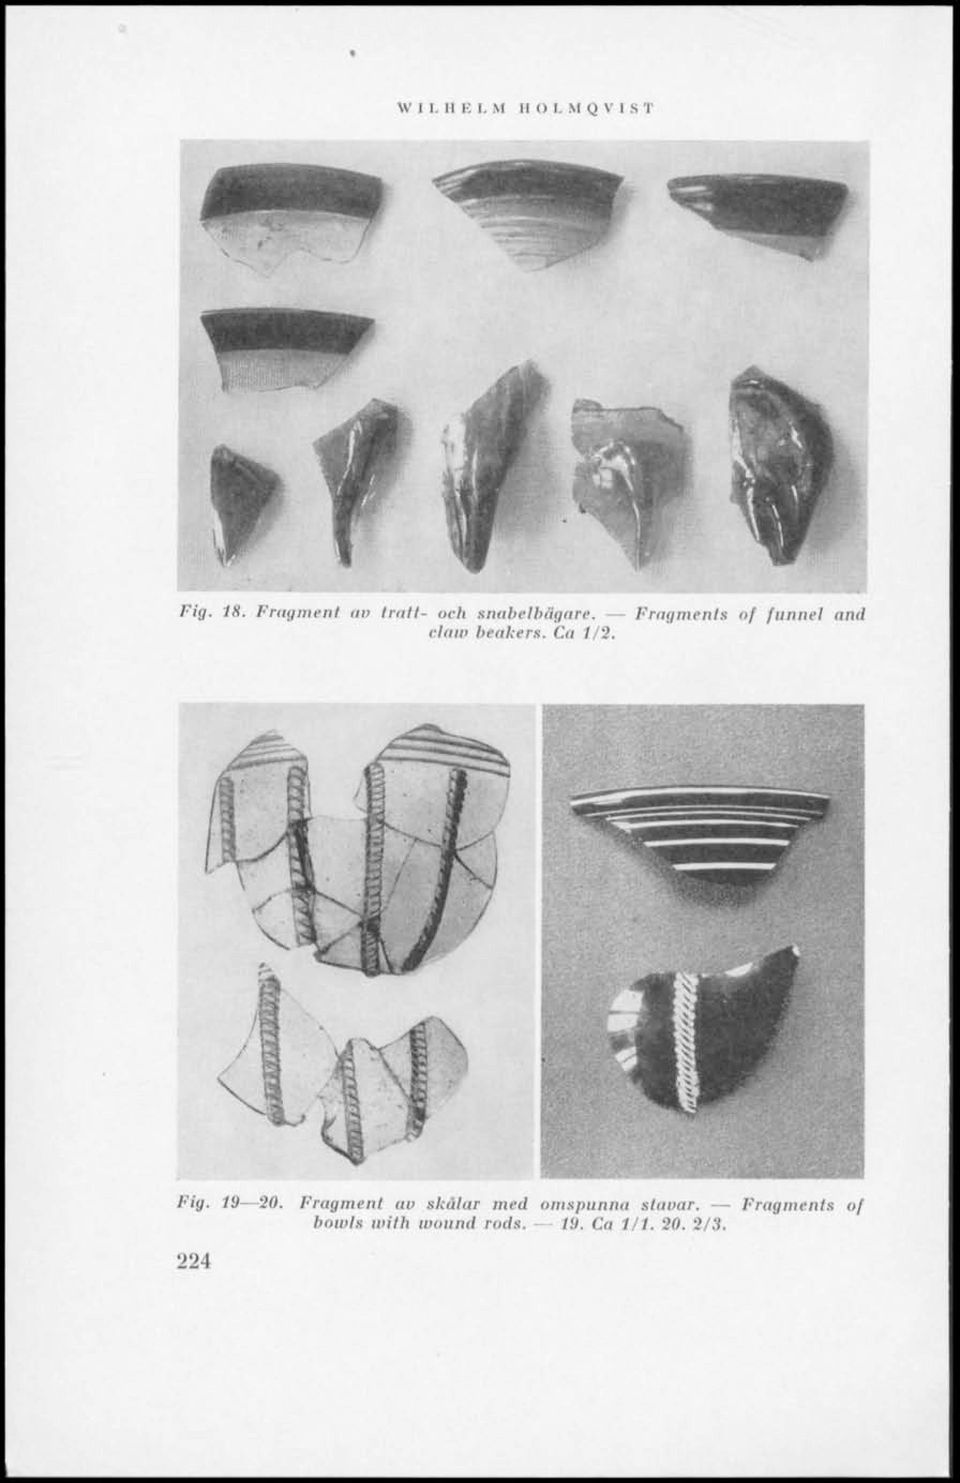 Fragments af funnet und daw beakers. Ca 1/2. Fig. 19 20.